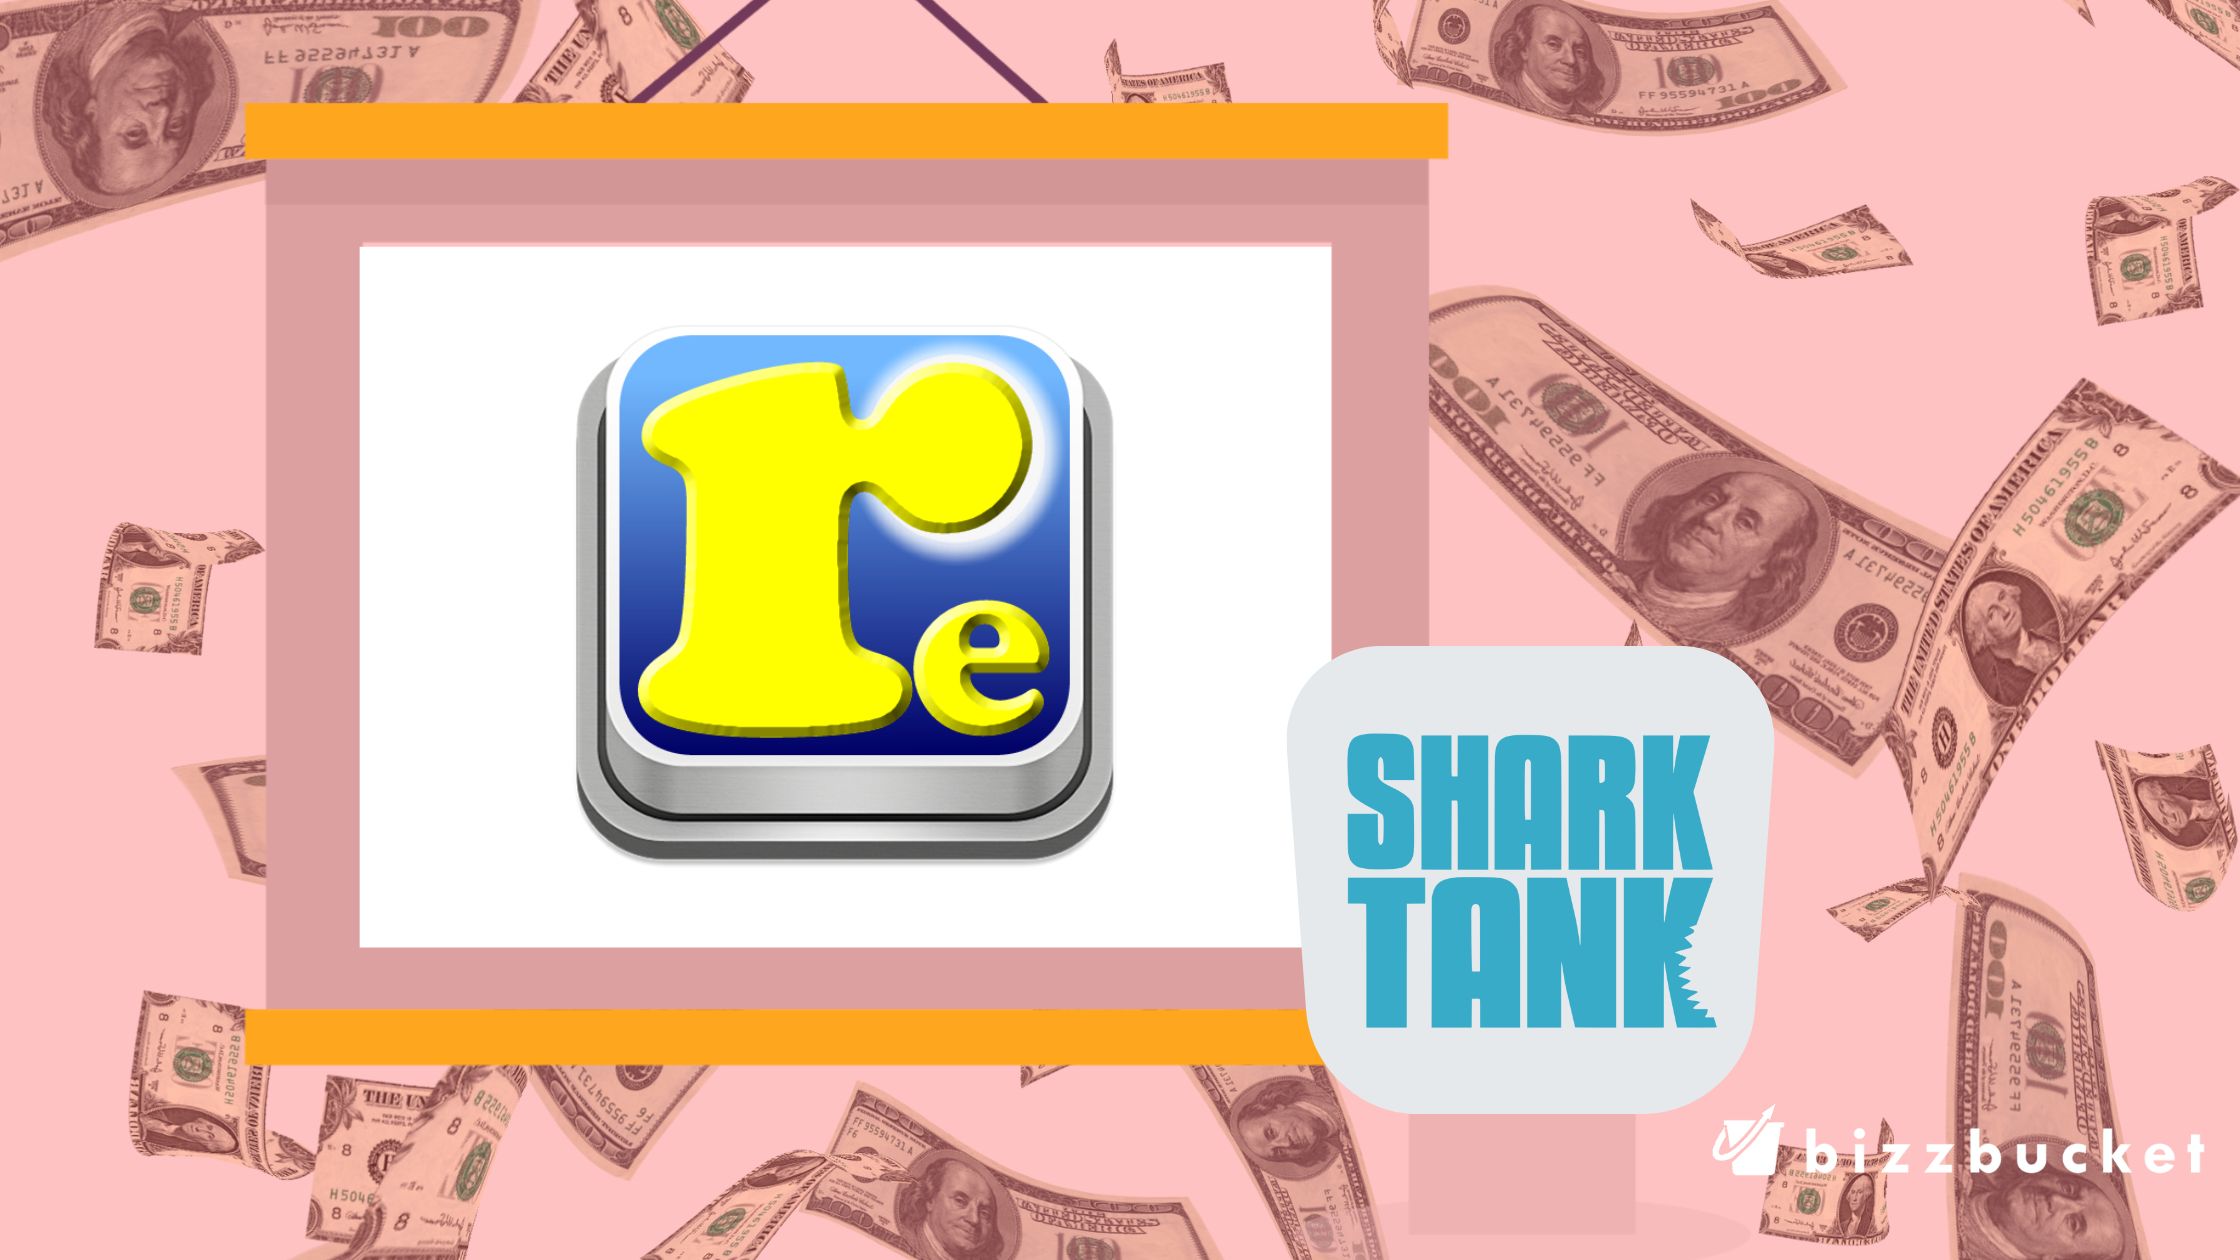 ReThink shark tank update